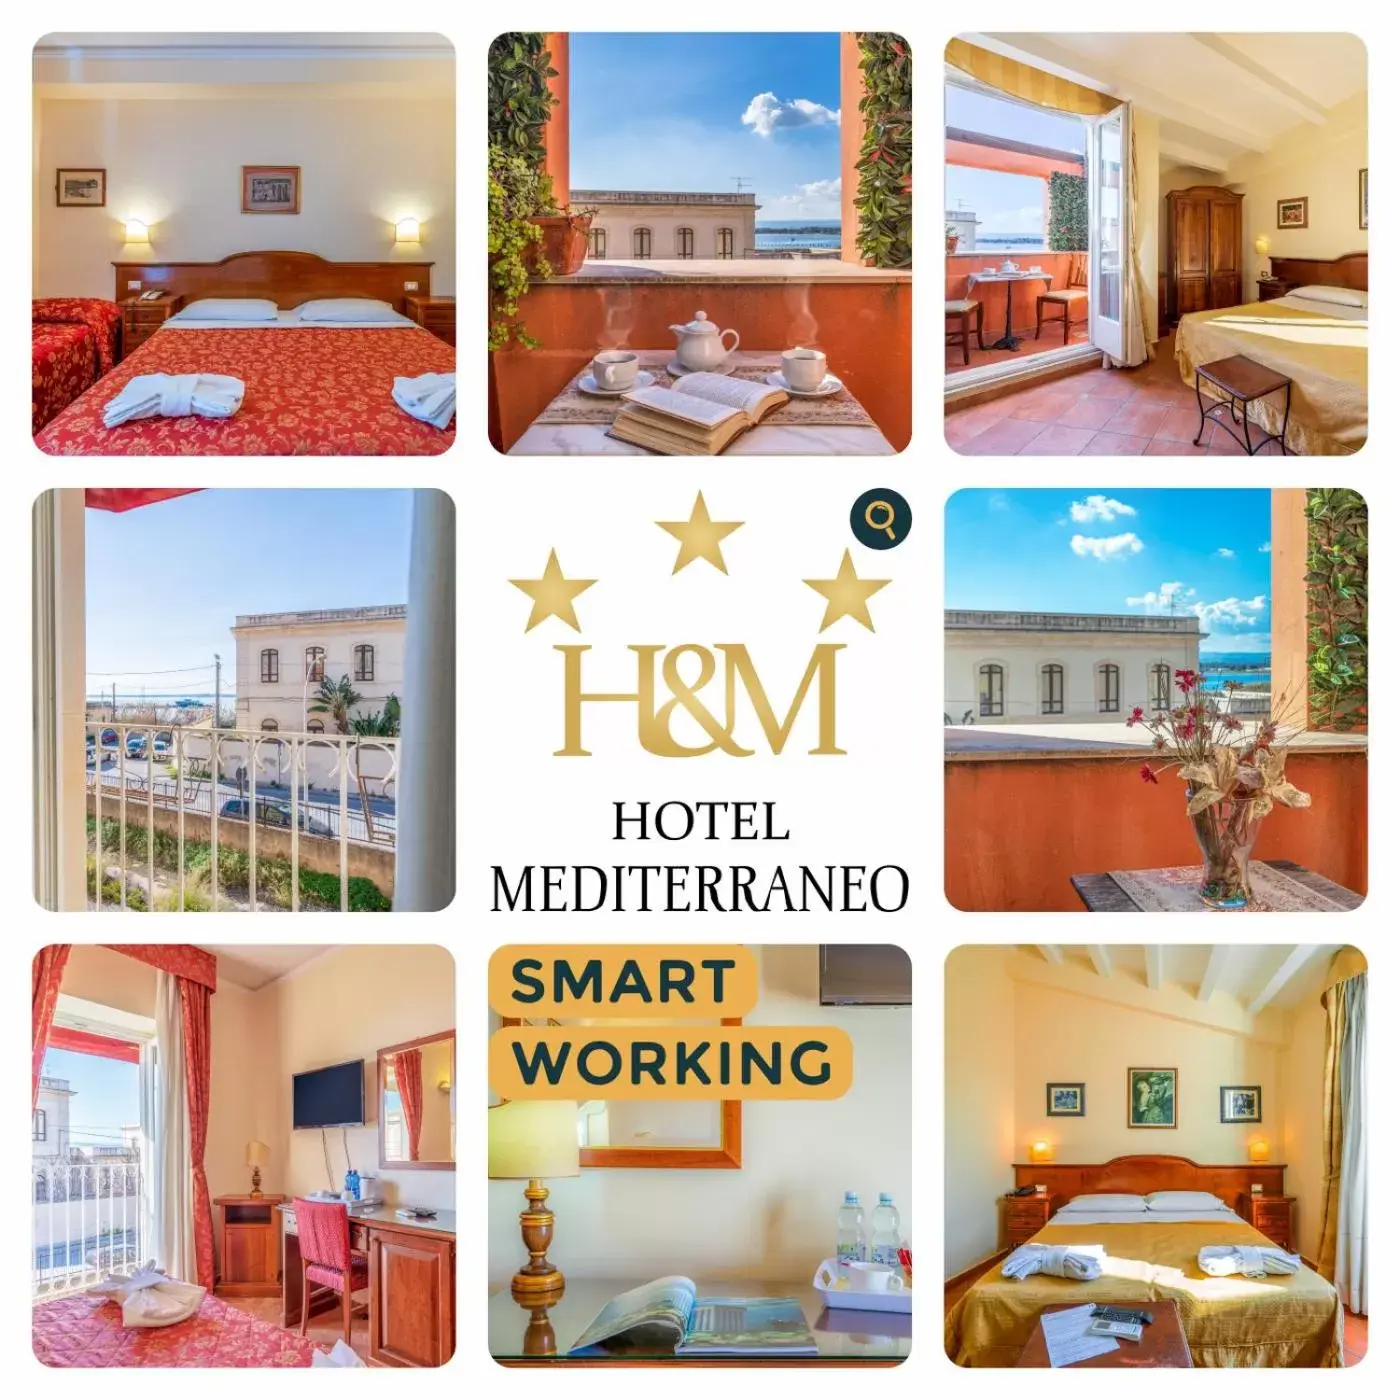 Text overlay in Hotel Mediterraneo